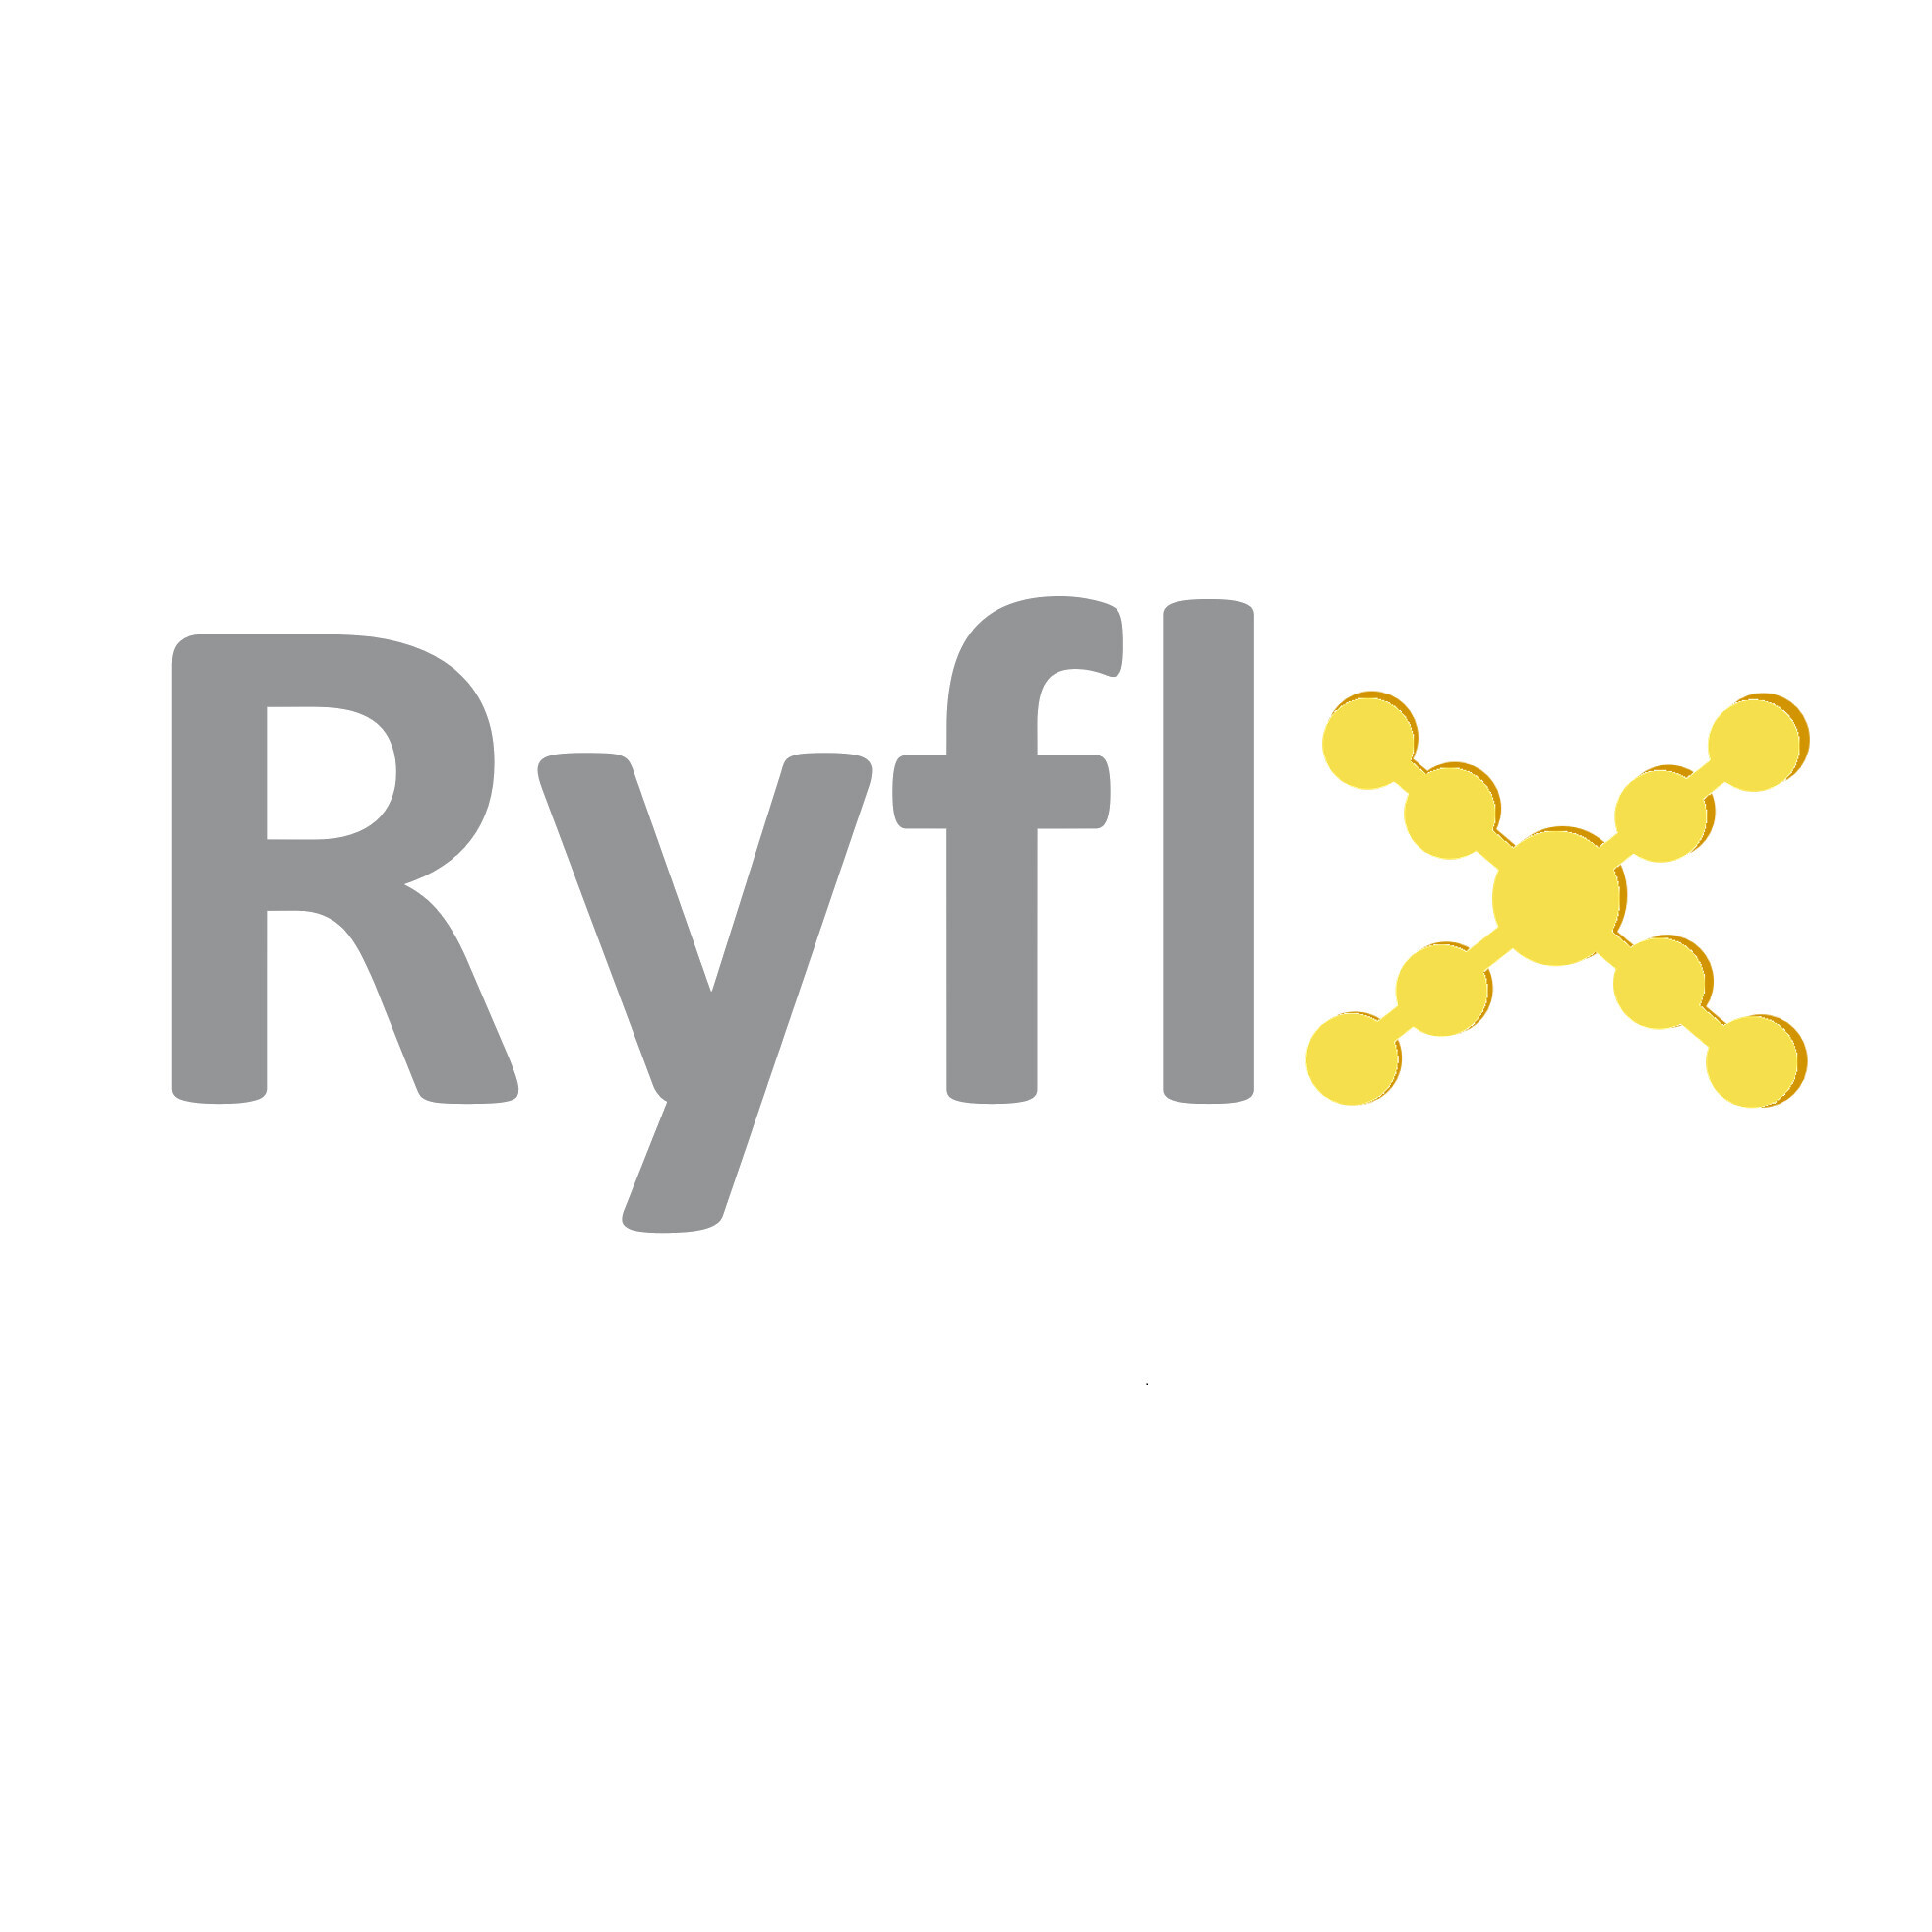 Ryflx